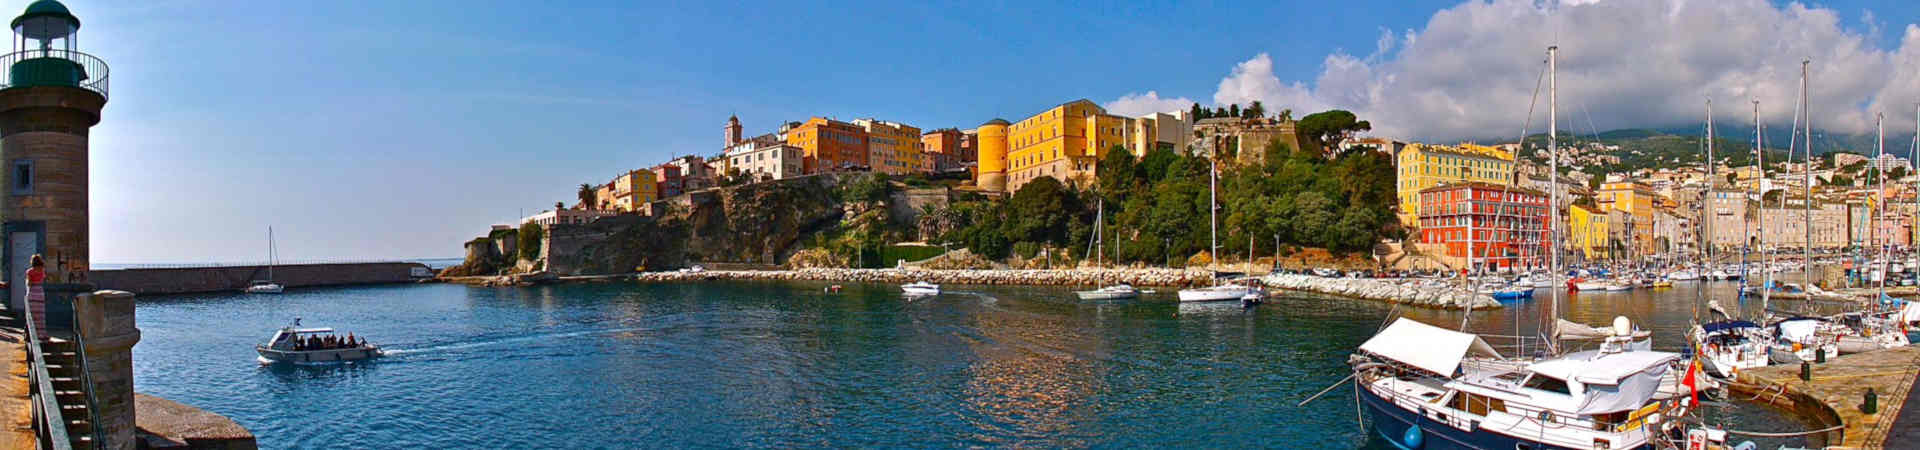 Imagen recurso del puerto de destino Bastia para la ruta en ferry Savona - Bastia